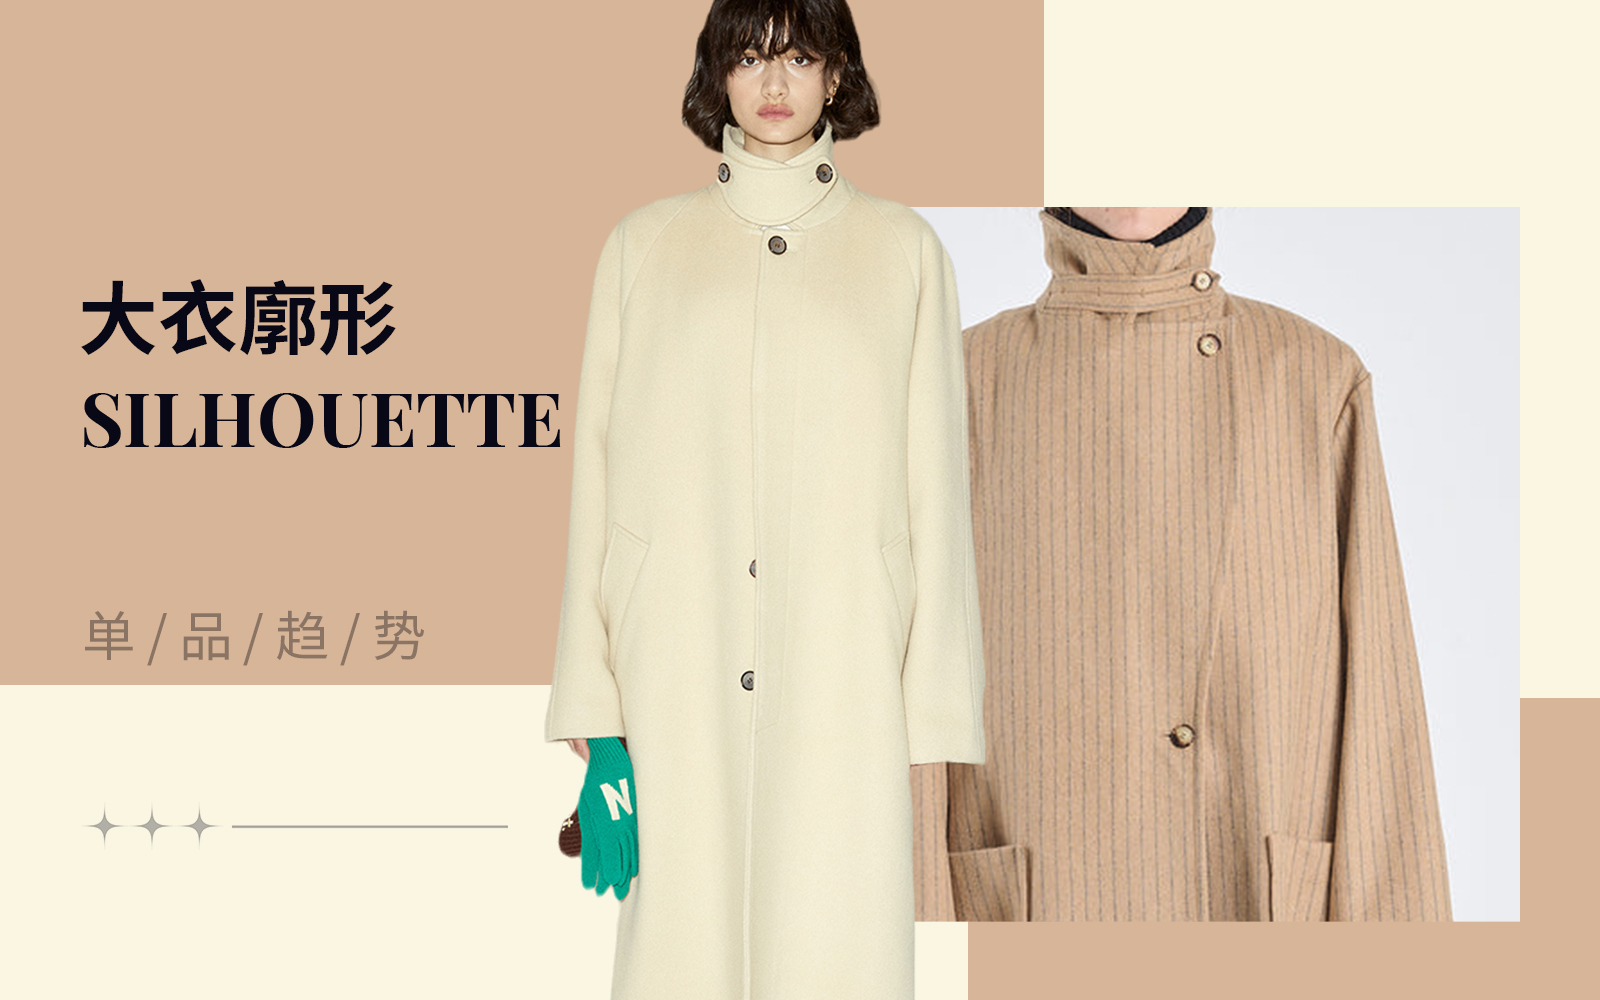 Soft & Minimal -- The Silhouette Trend for Women's Overcoat